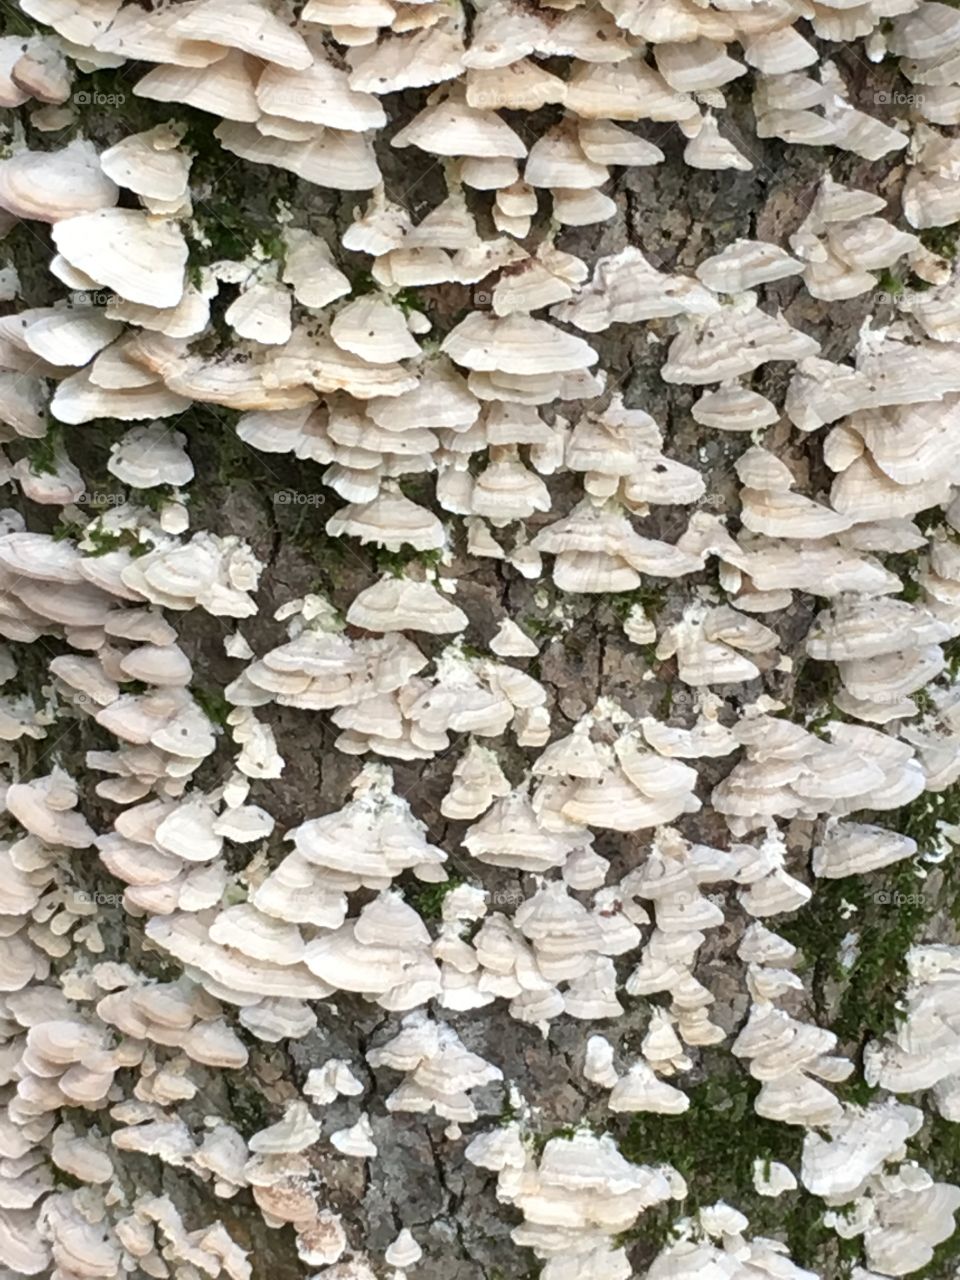 Fungi on a tree trunk.